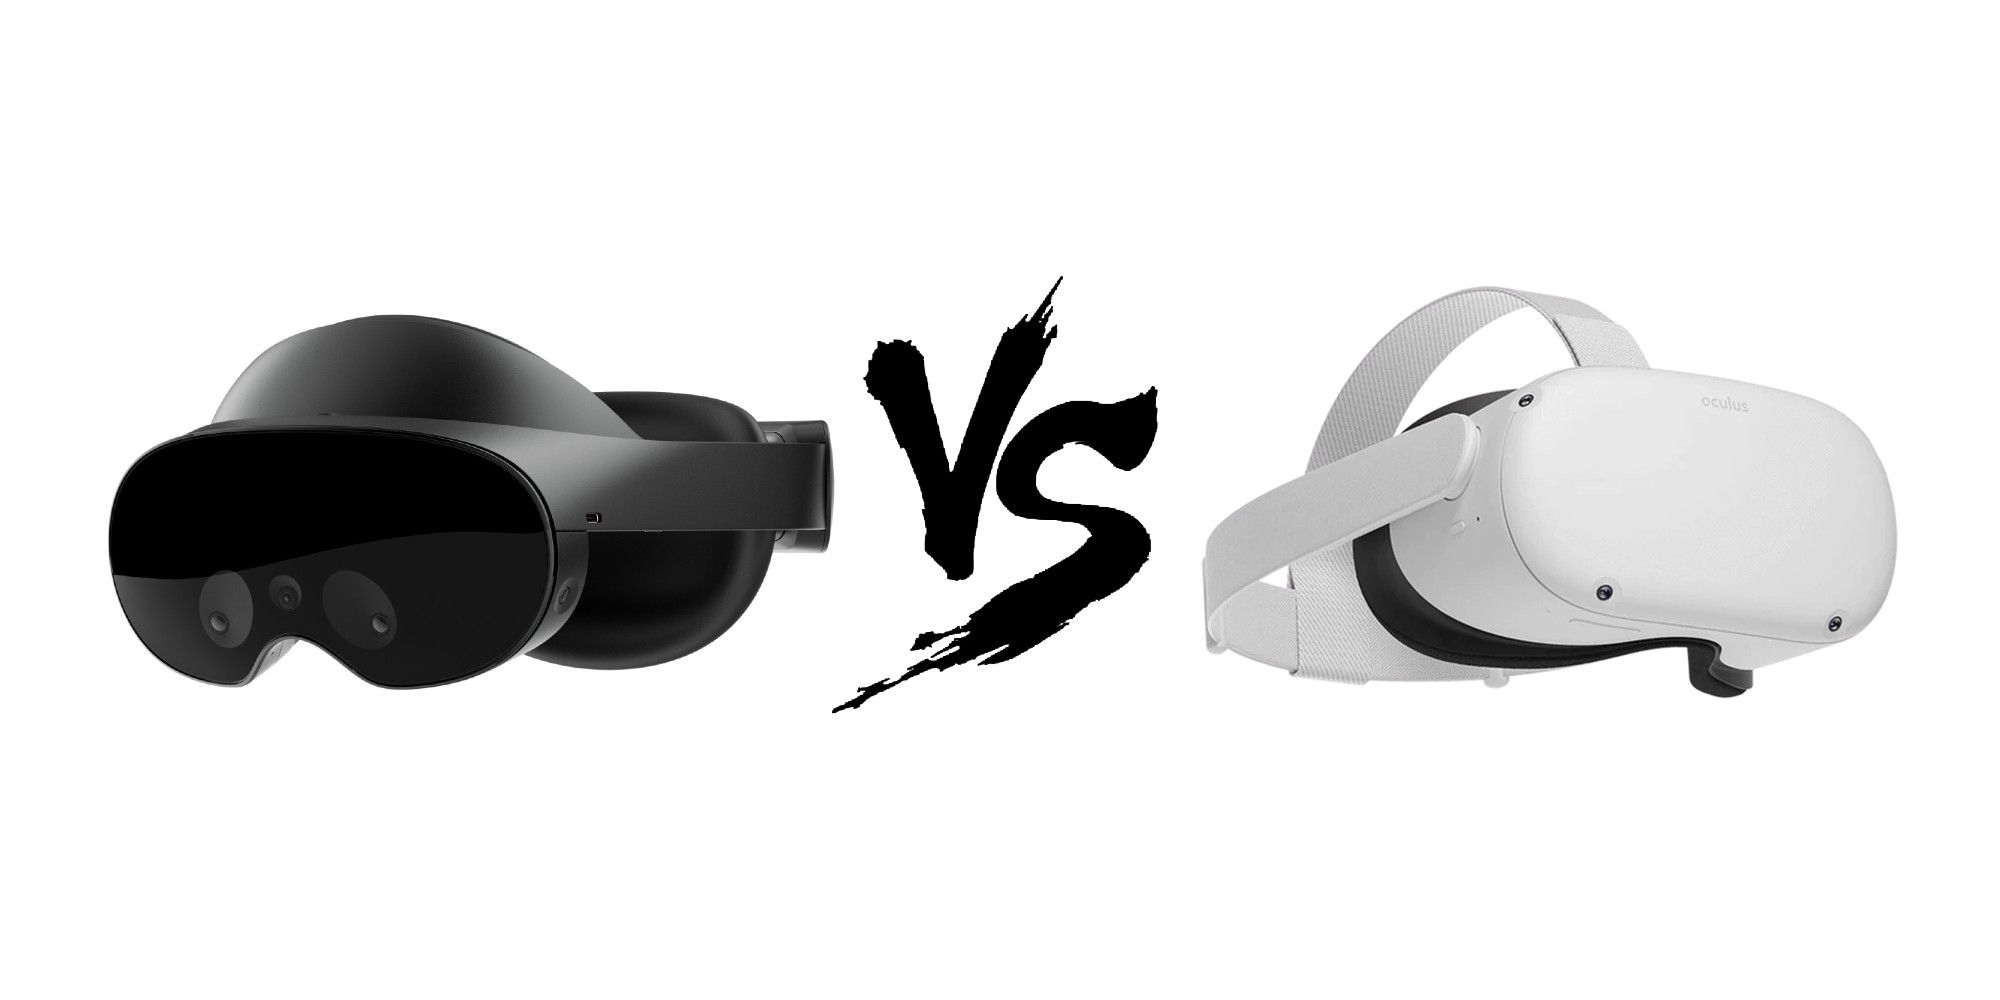 Meta Quest 2 & Quest Pro VR Headsets Get Price Cuts - VRScout